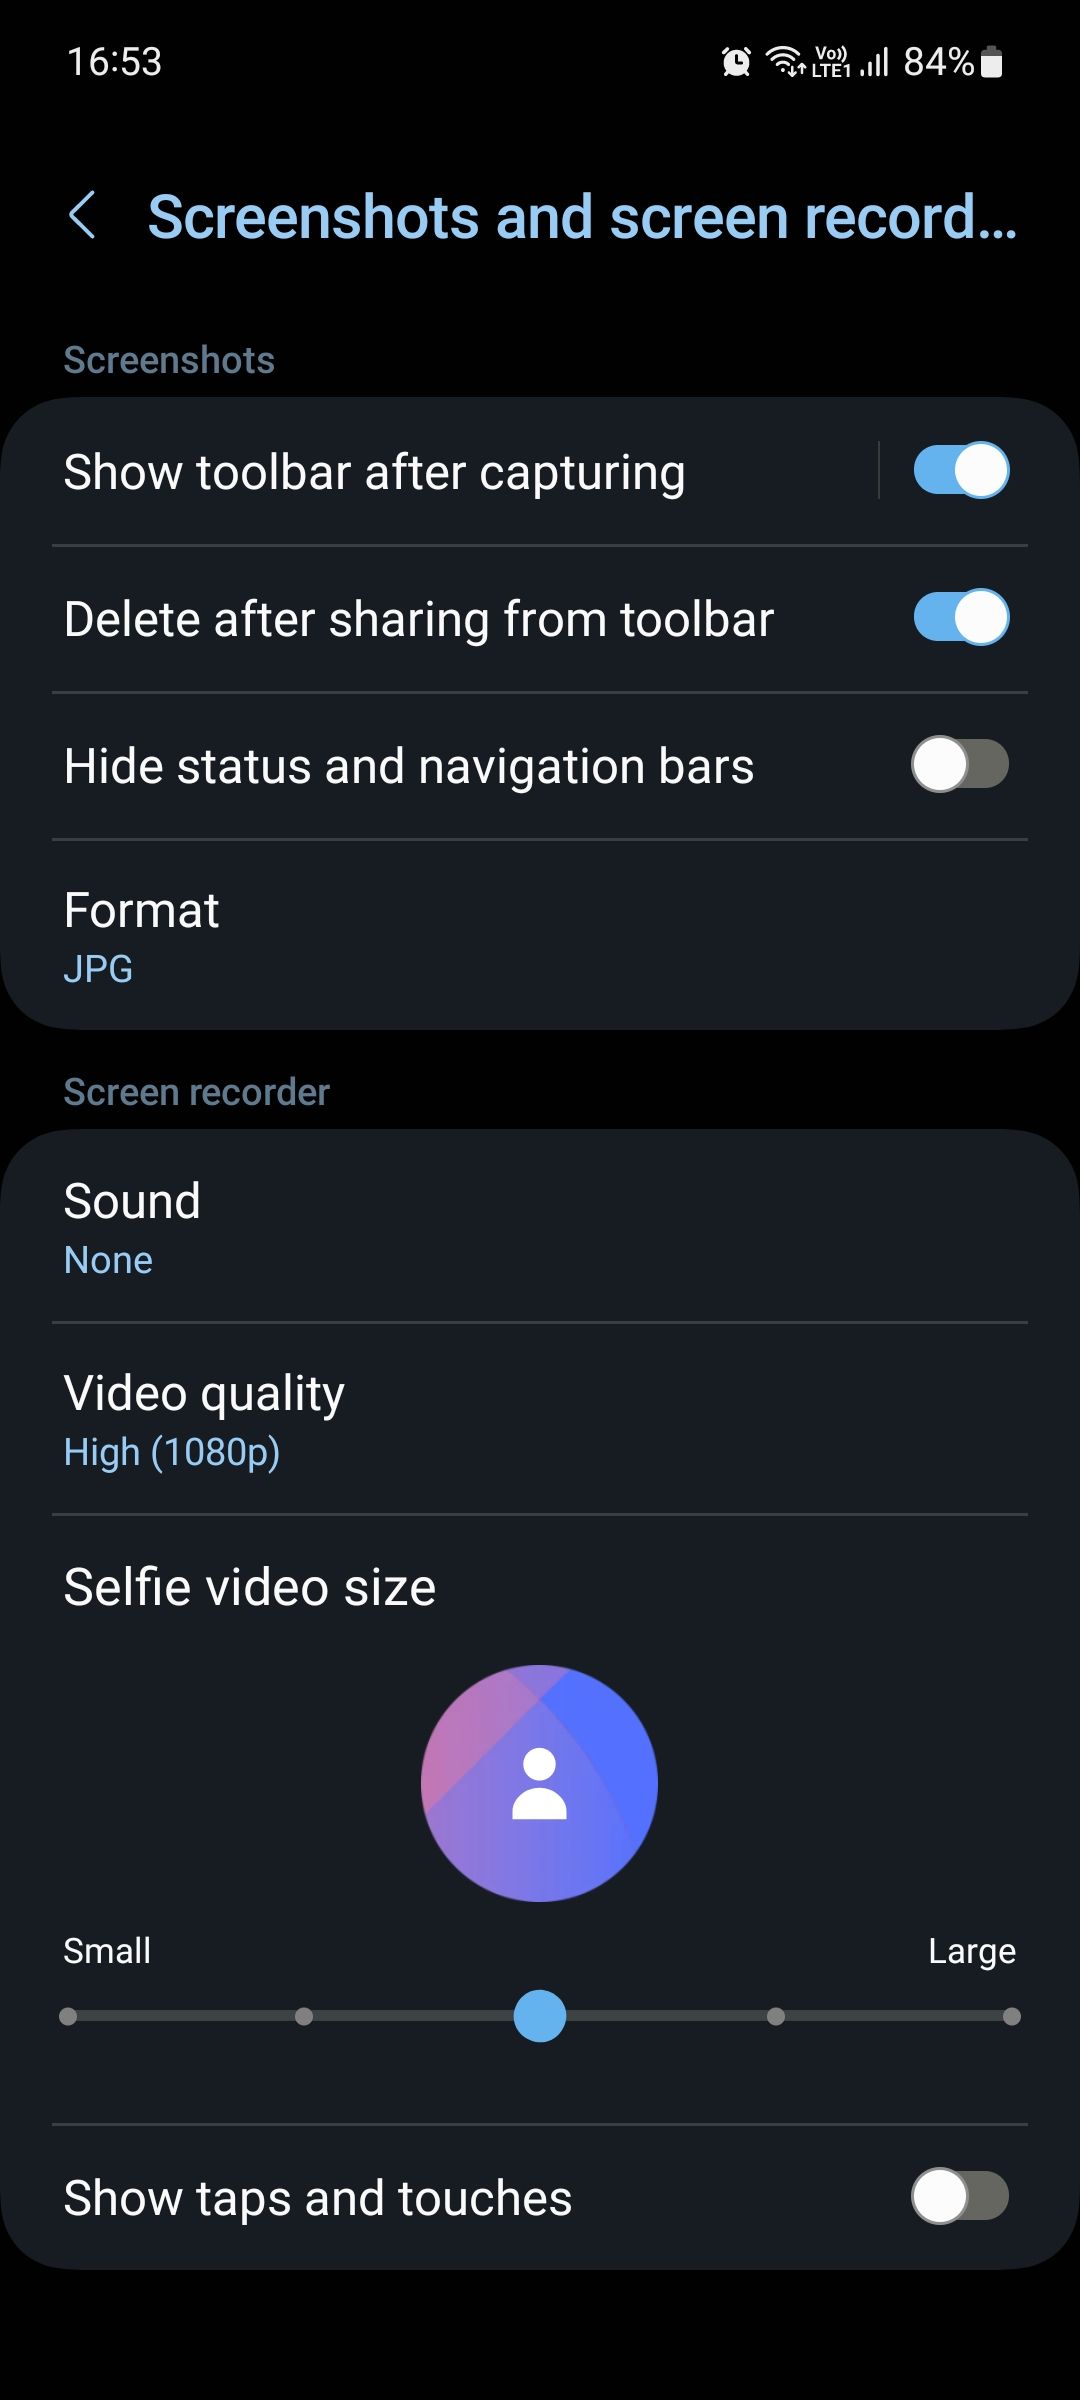 Samsung One UI 5 Screenshots and screen recorder menu